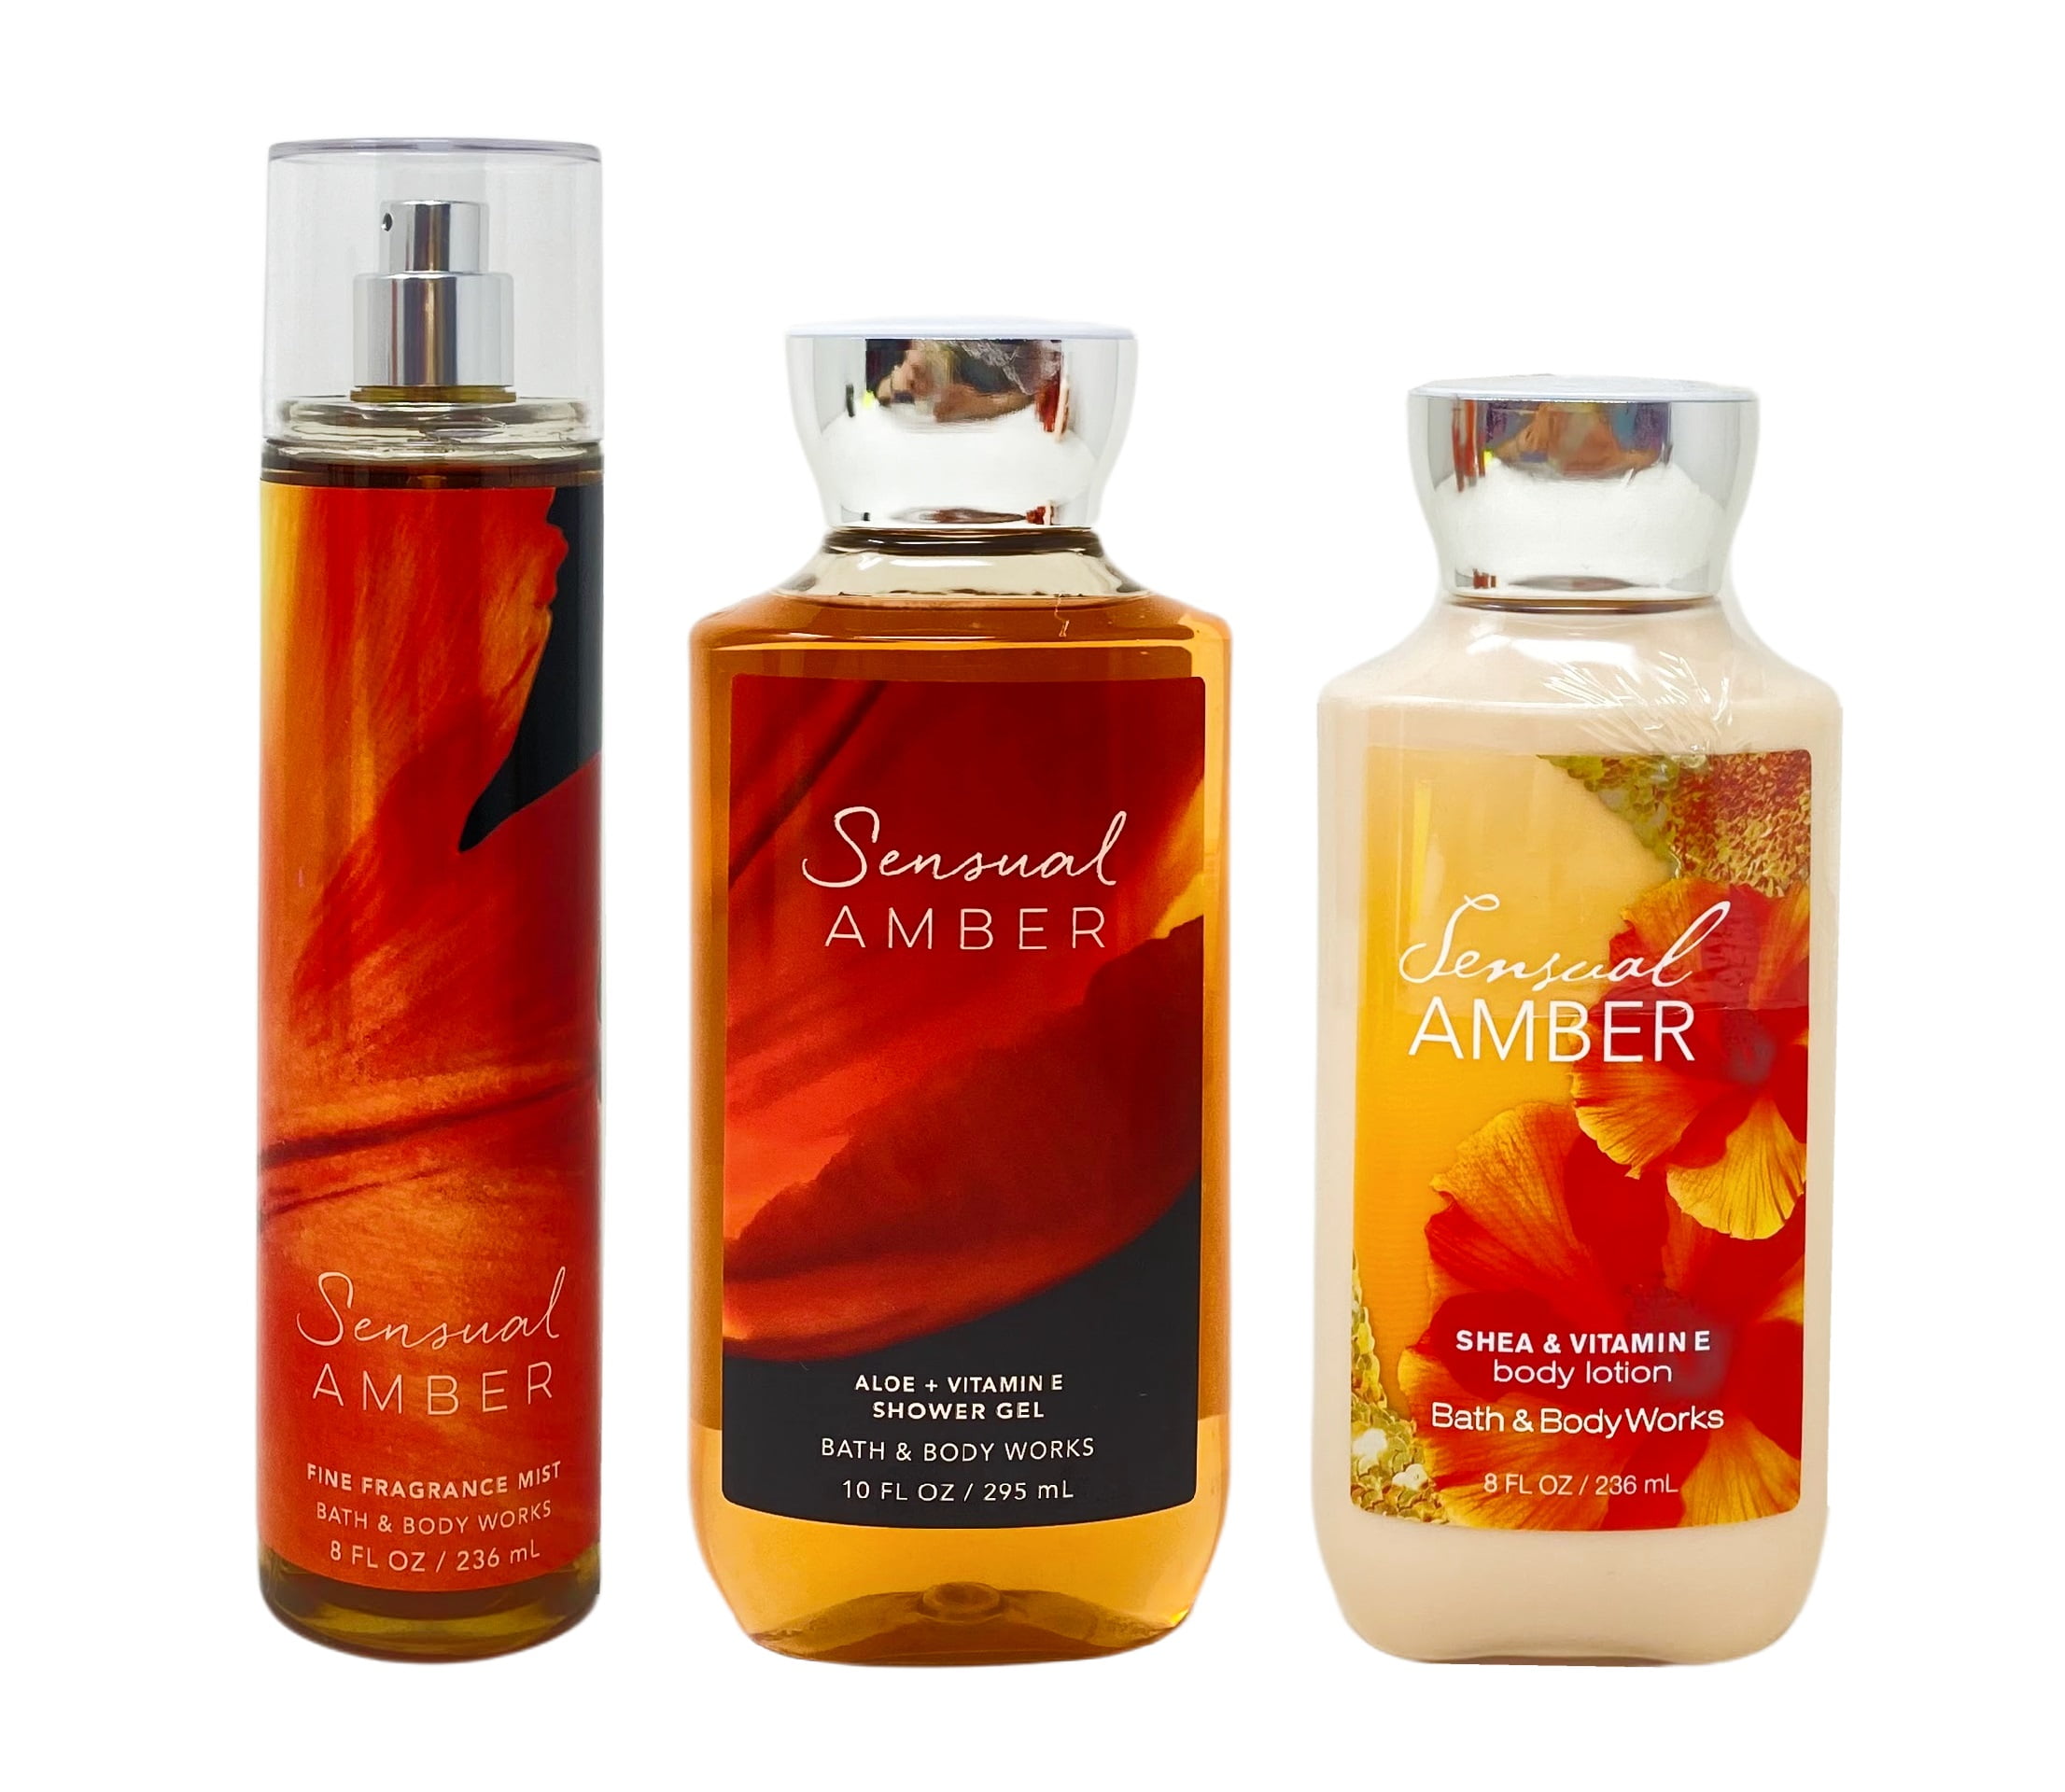 Bath & Body Works Sensual Amber Body Lotion and Mist Fragrance Set